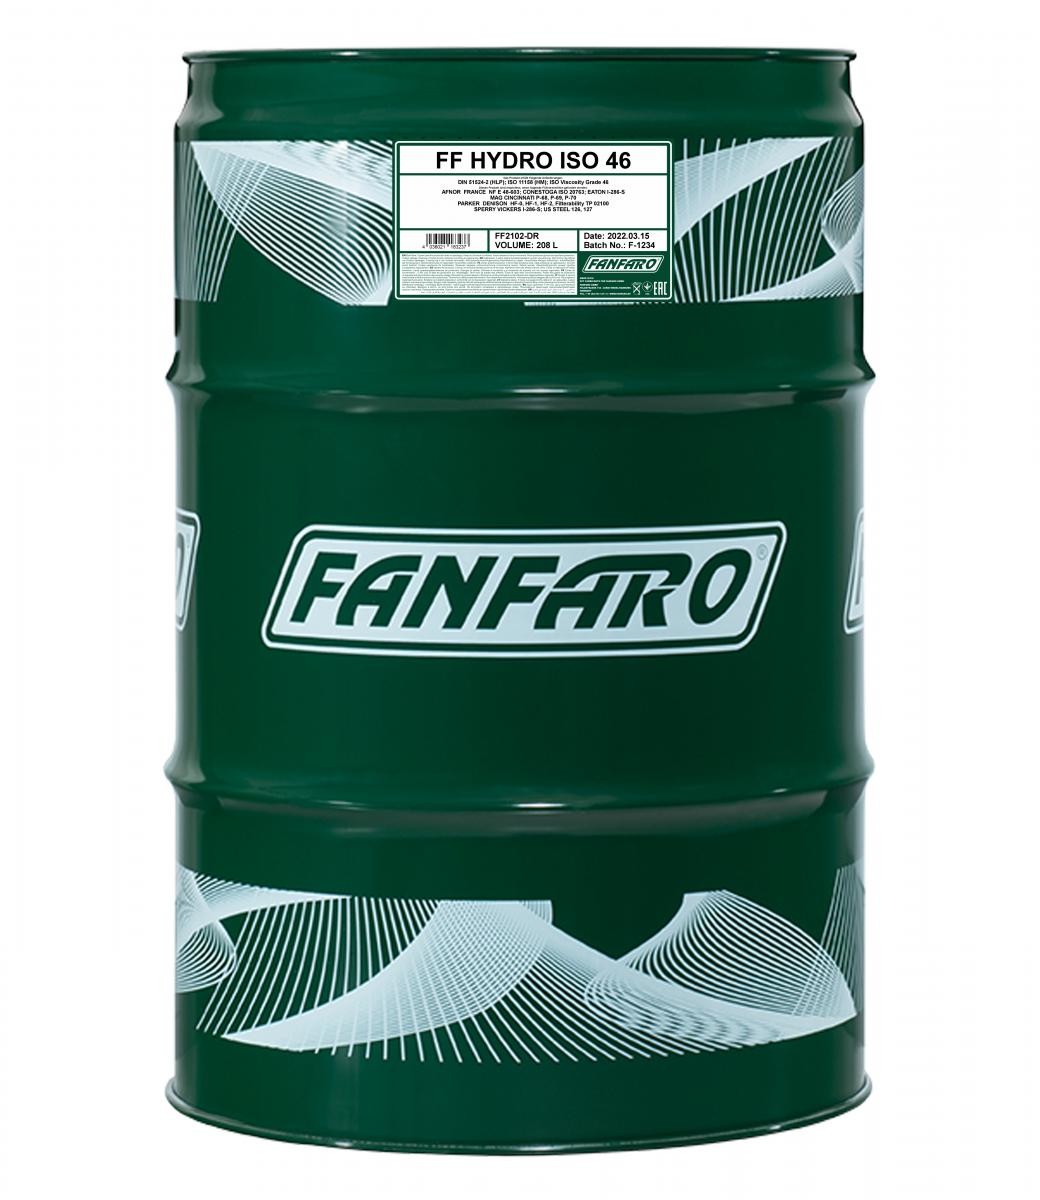 FANFARO Hydro, ISO 46 Inhalt: 208l DIN 51524-2 HLP, ISO 11158 HM, ISO VG 46 Hydrauliköl FF2102-DR kaufen